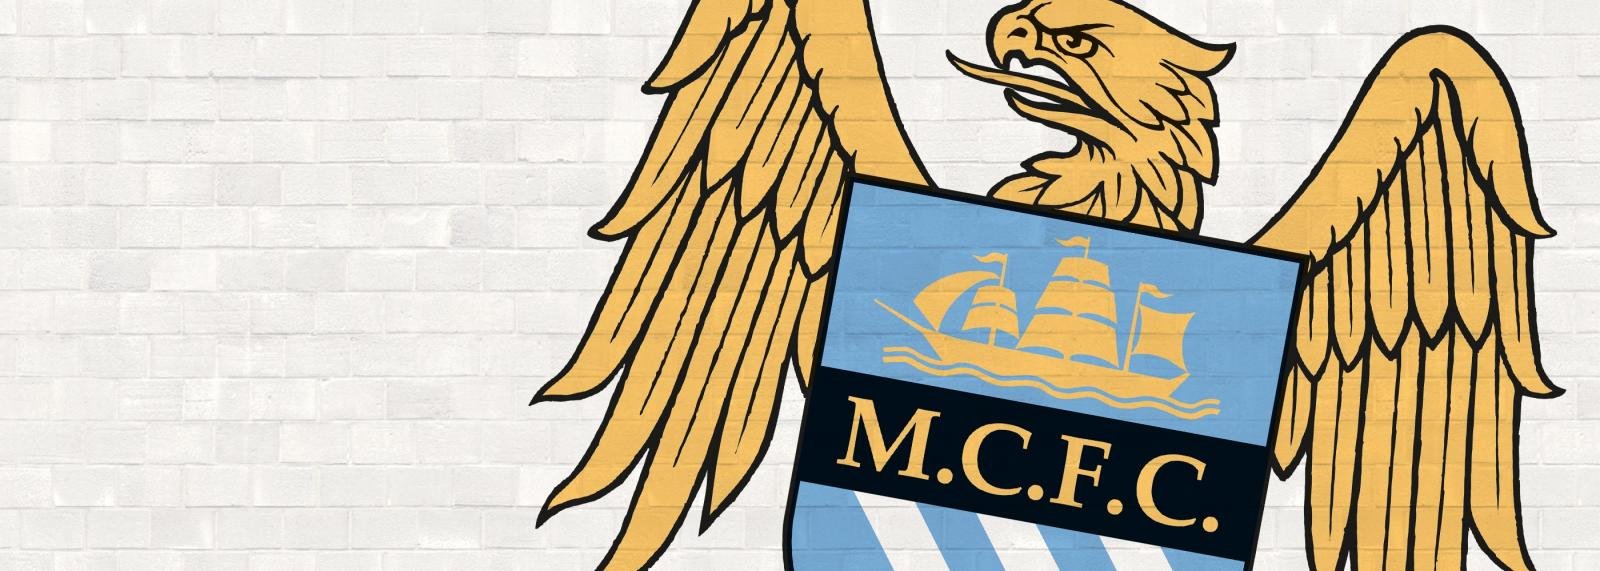 Profile: Manchester City’s new £37m man, Leroy Sane